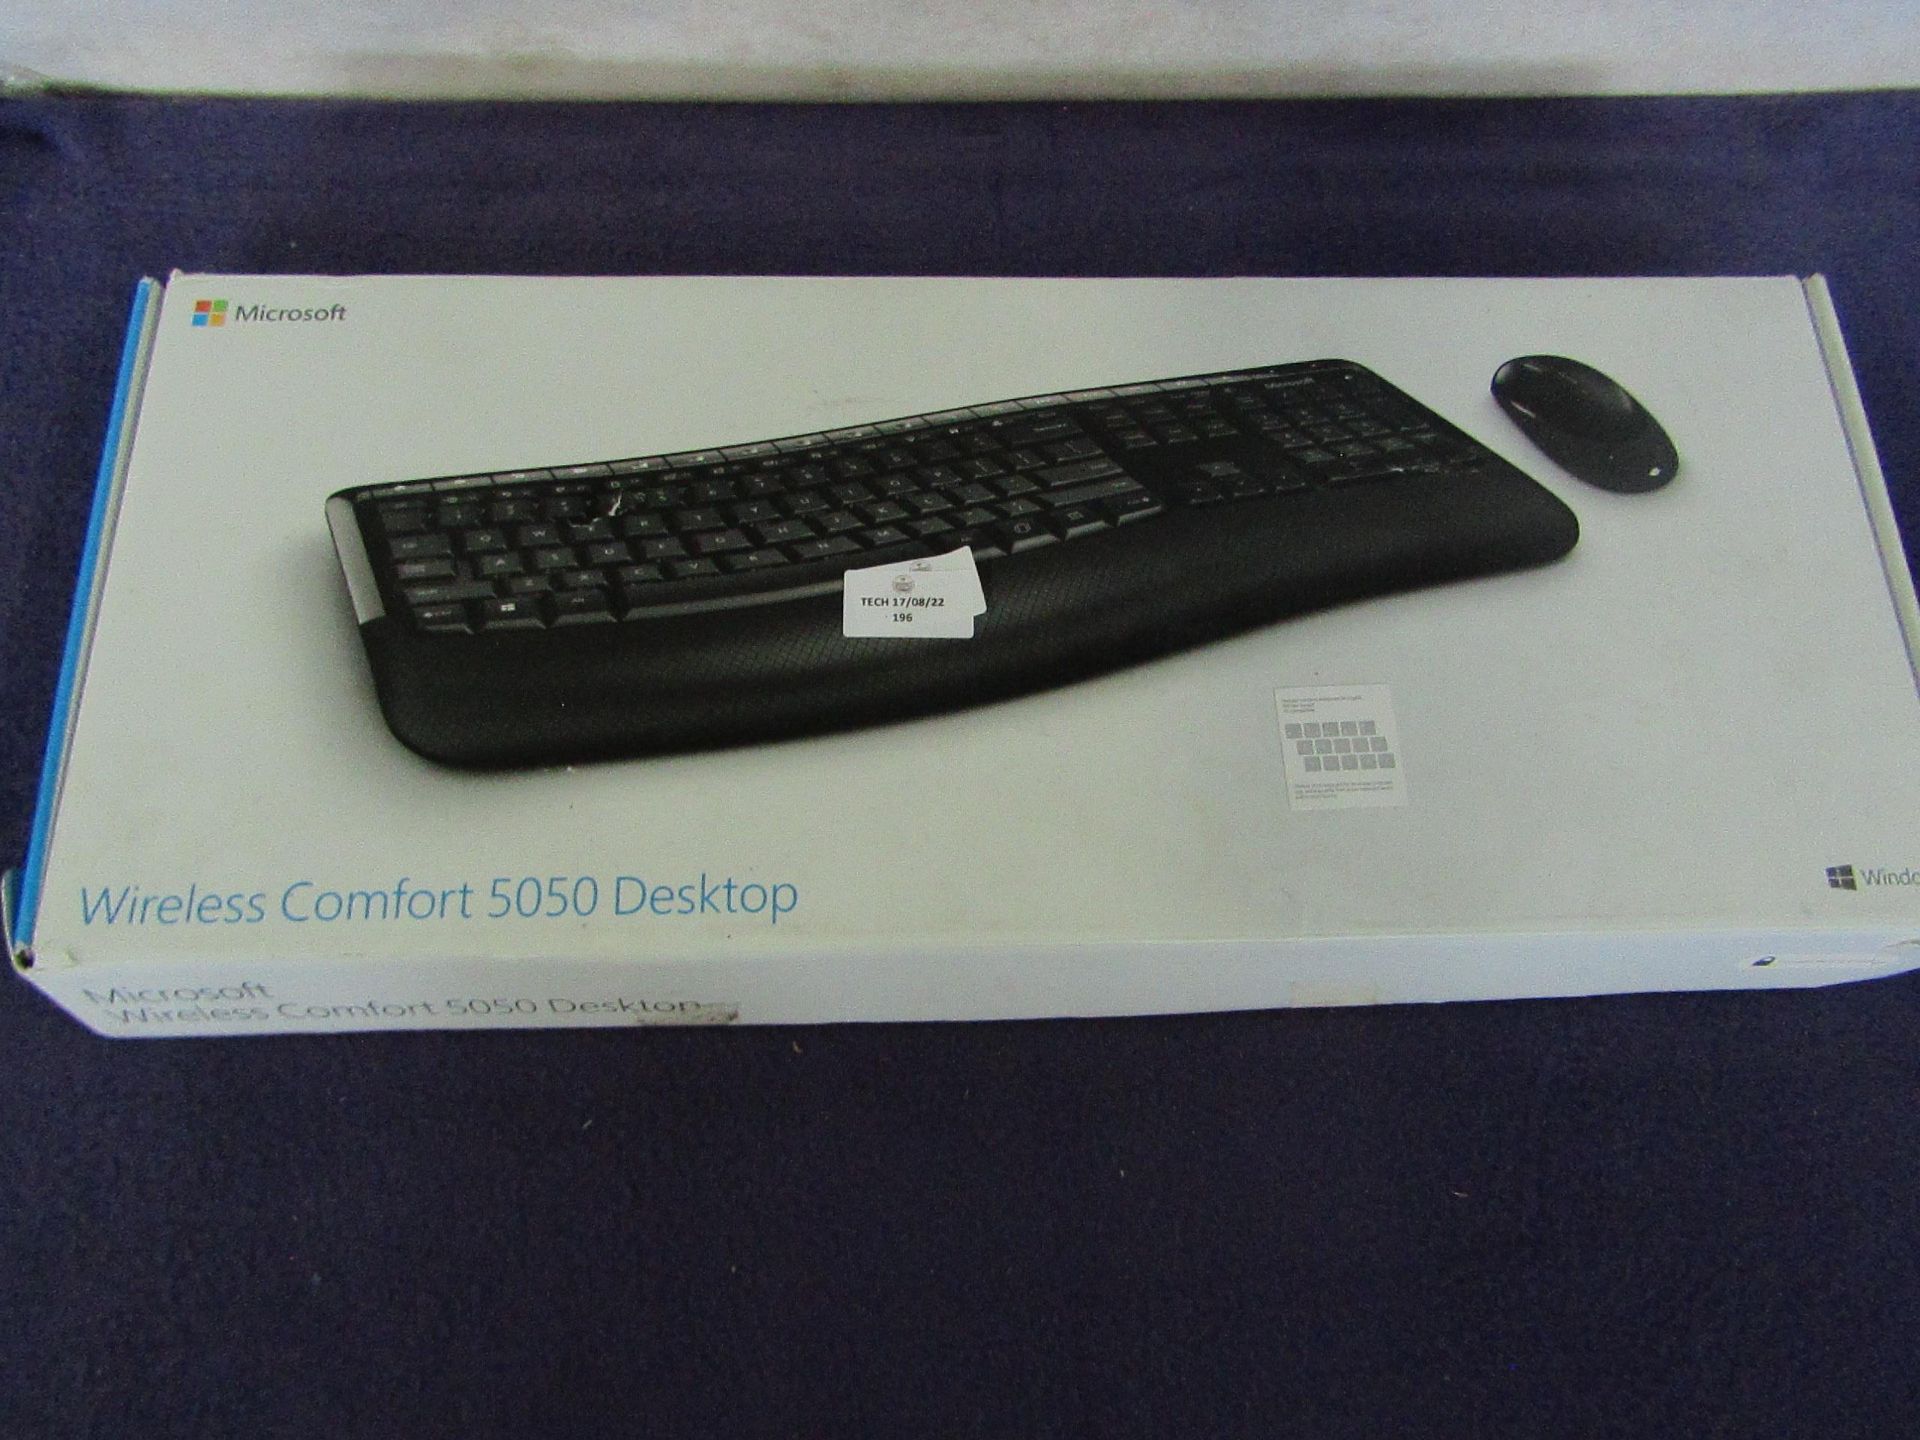 Microsoft - Wireless Comfort 5050 Desktop Keyboard & Mouse Set - Black - Untested & Boxed.